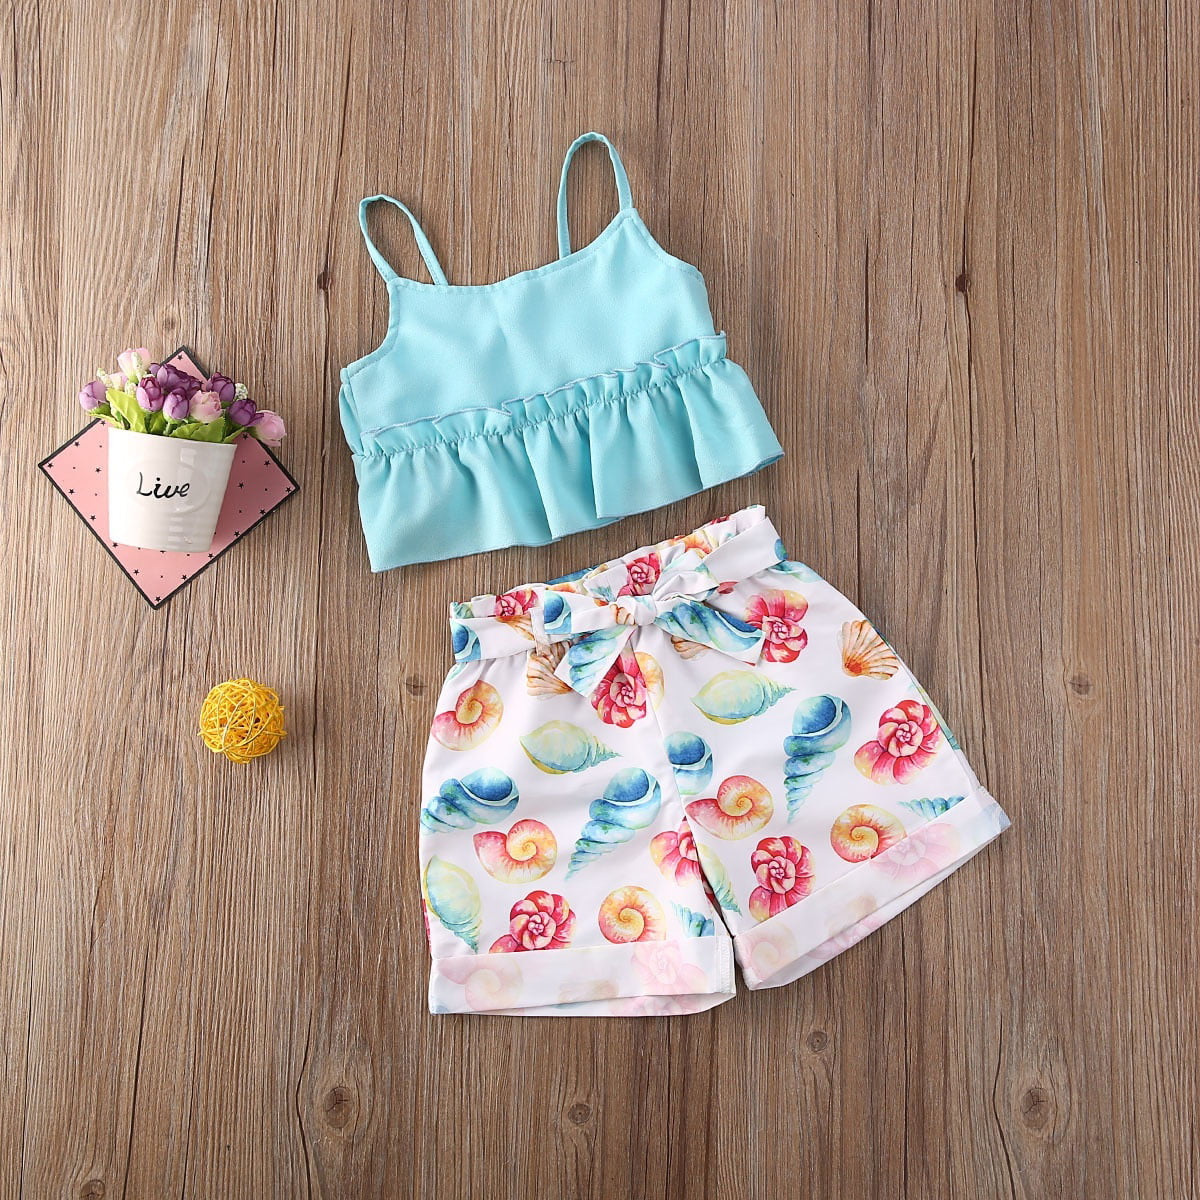 sandanper Toddler Baby Girl Summer Floral PrintTassel Croptops Sleeveless T ShirtsShorts Clothing Set Outfits